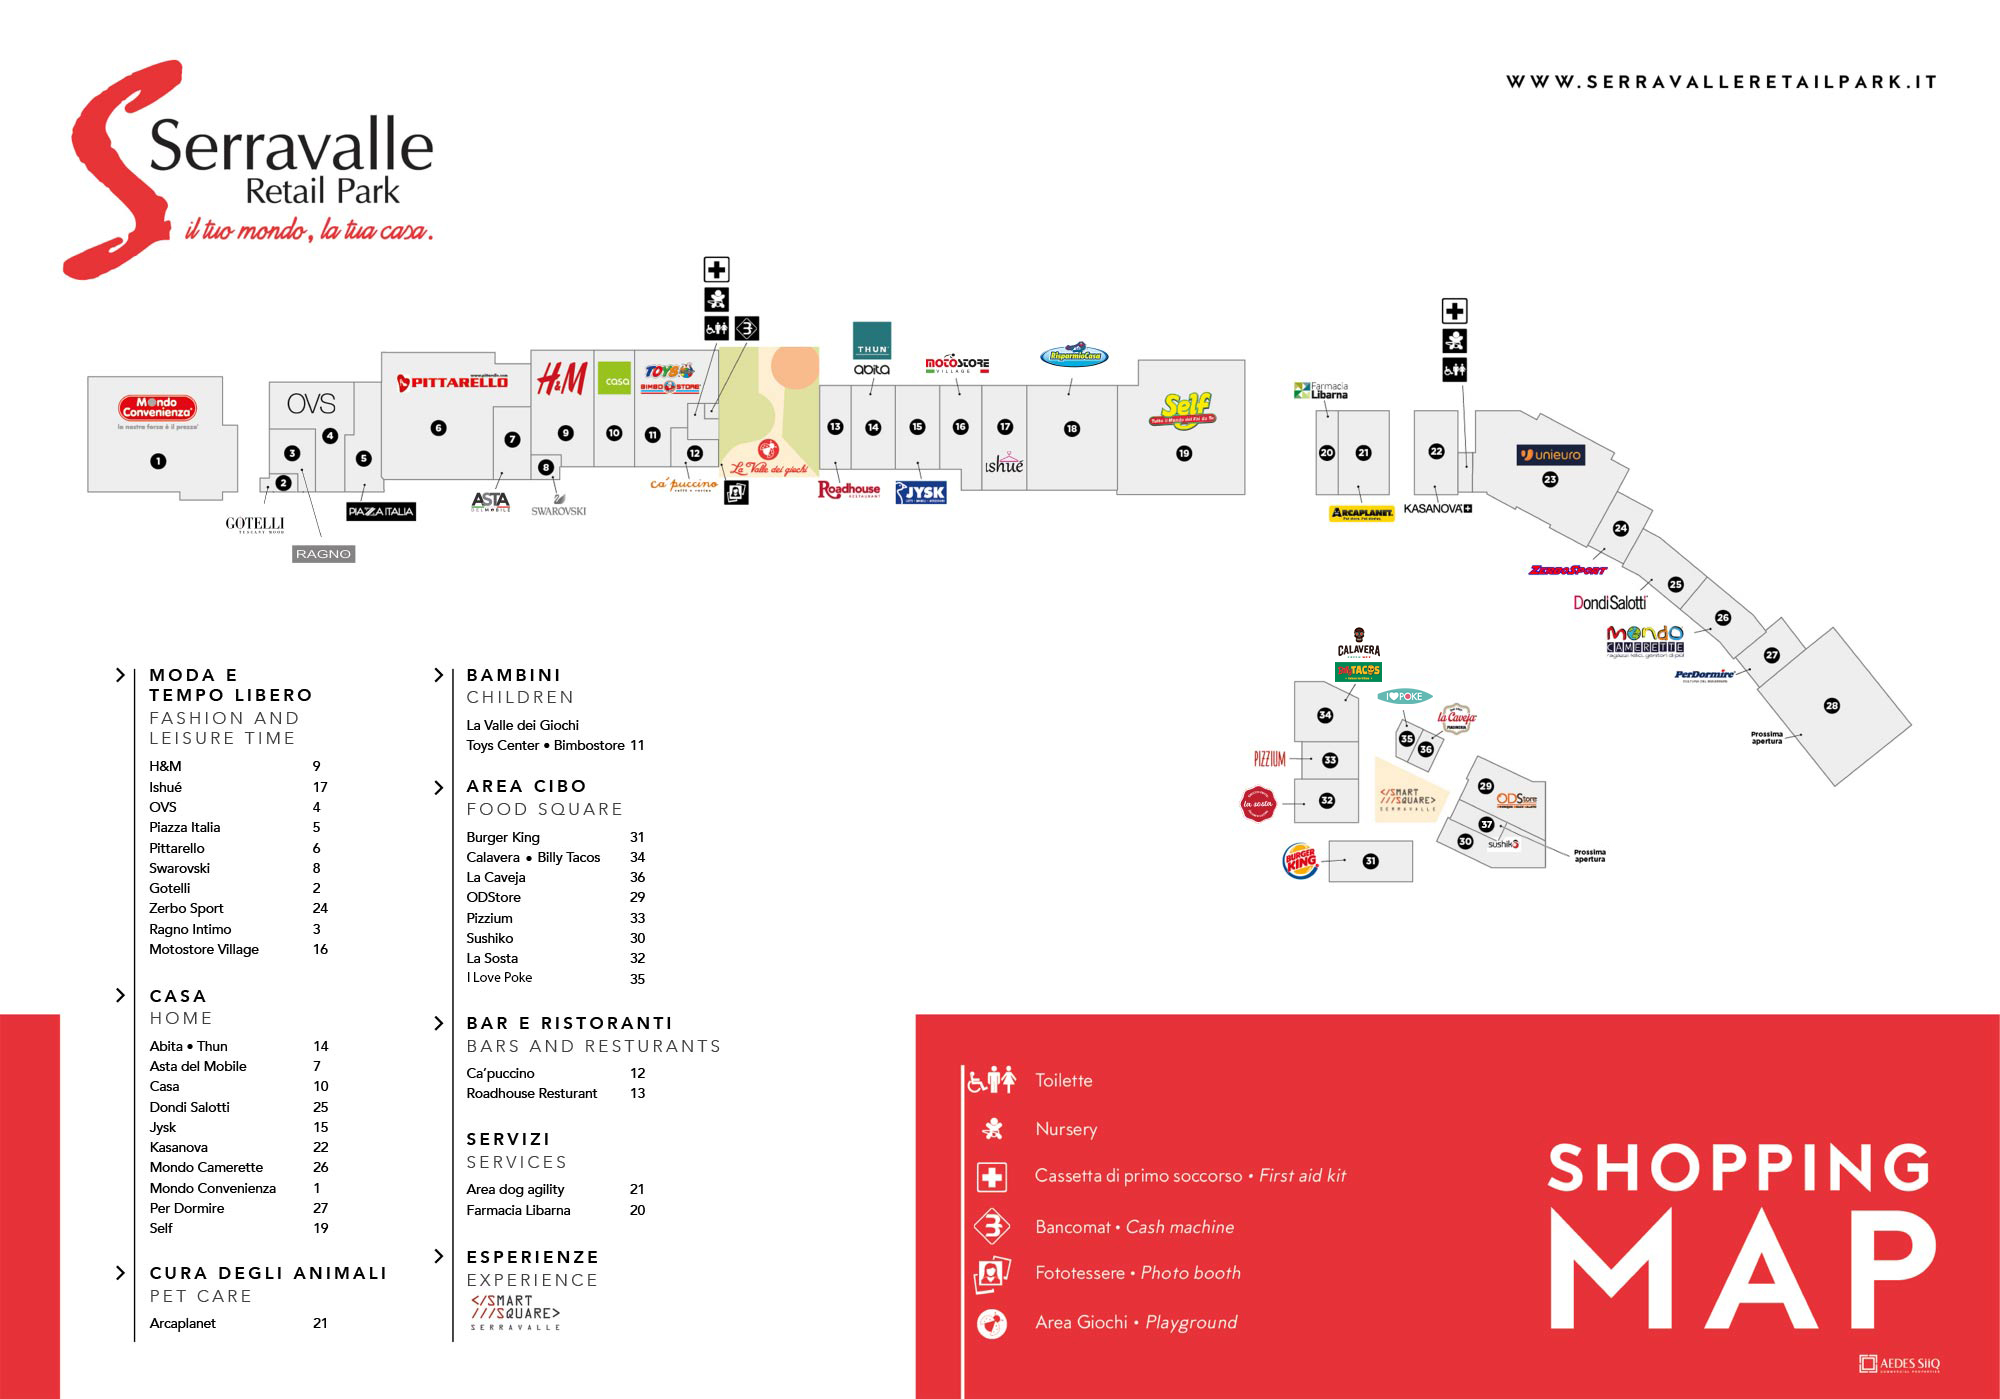 Serravalle Retail Park